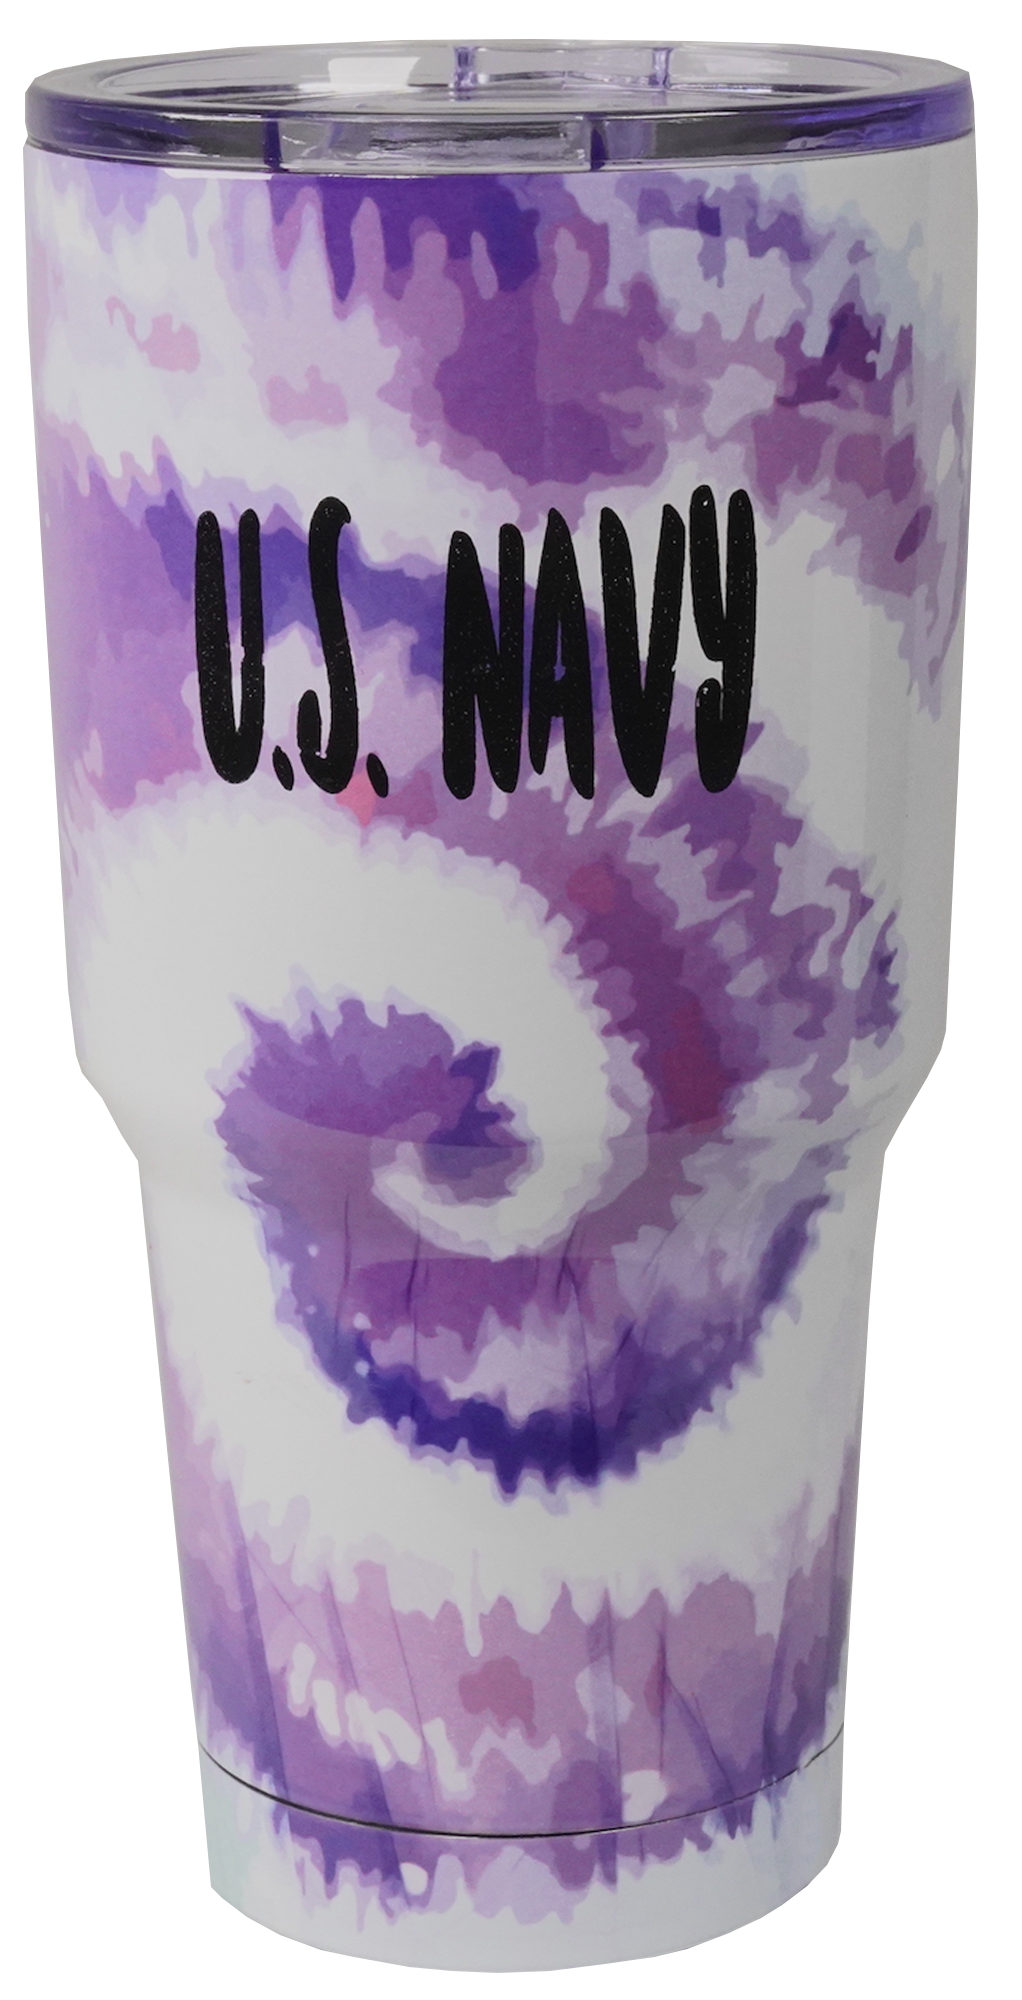 U.S. Navy Imprint on Tye Dye Stainless Tumbler - 28 oz.